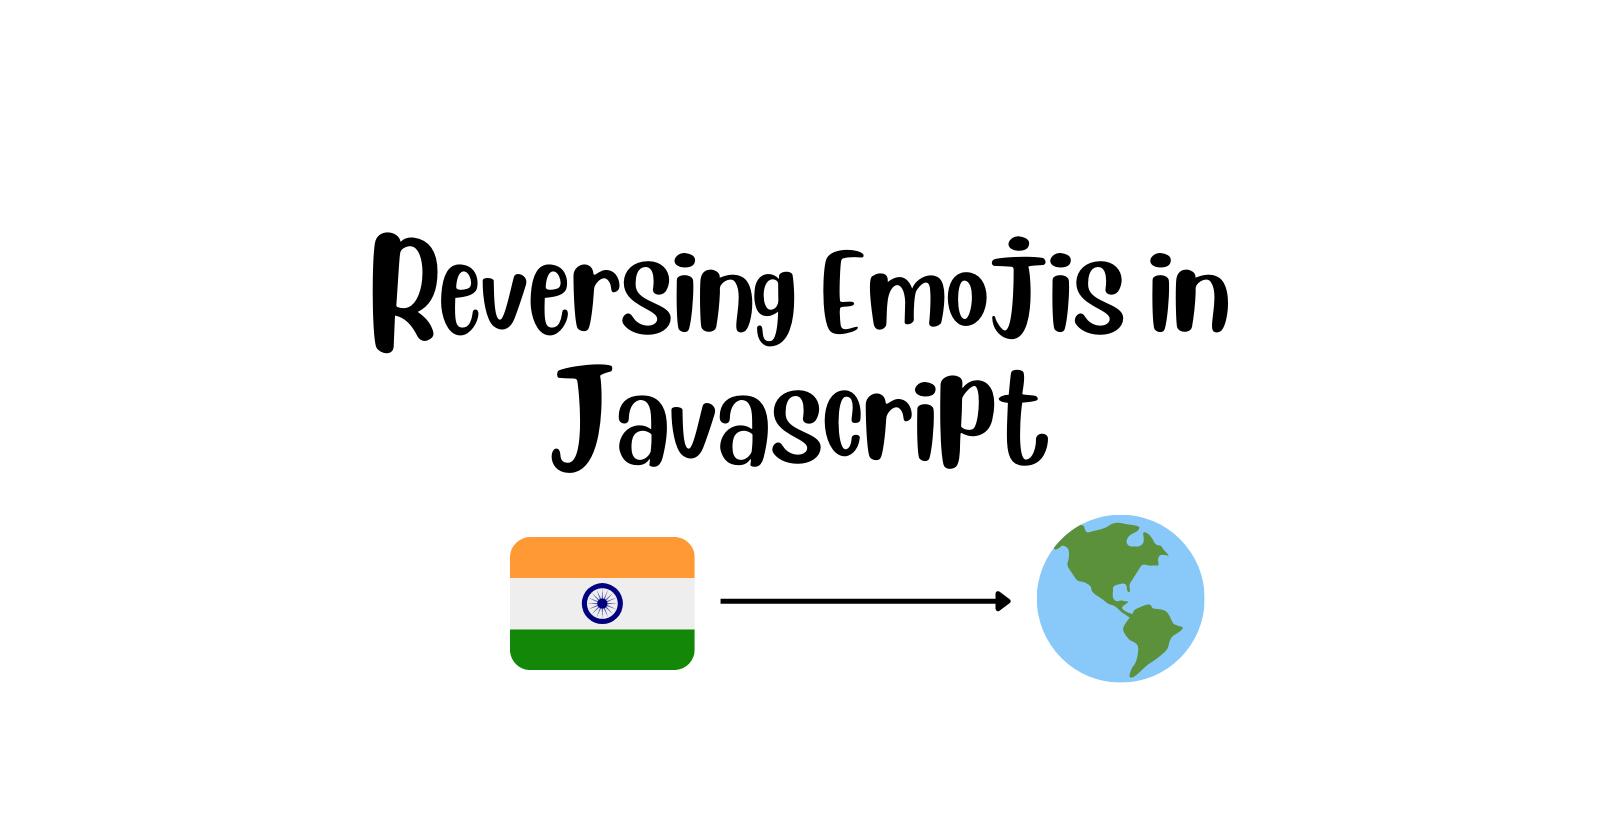 What happens when reversing an emoji in Javascript?